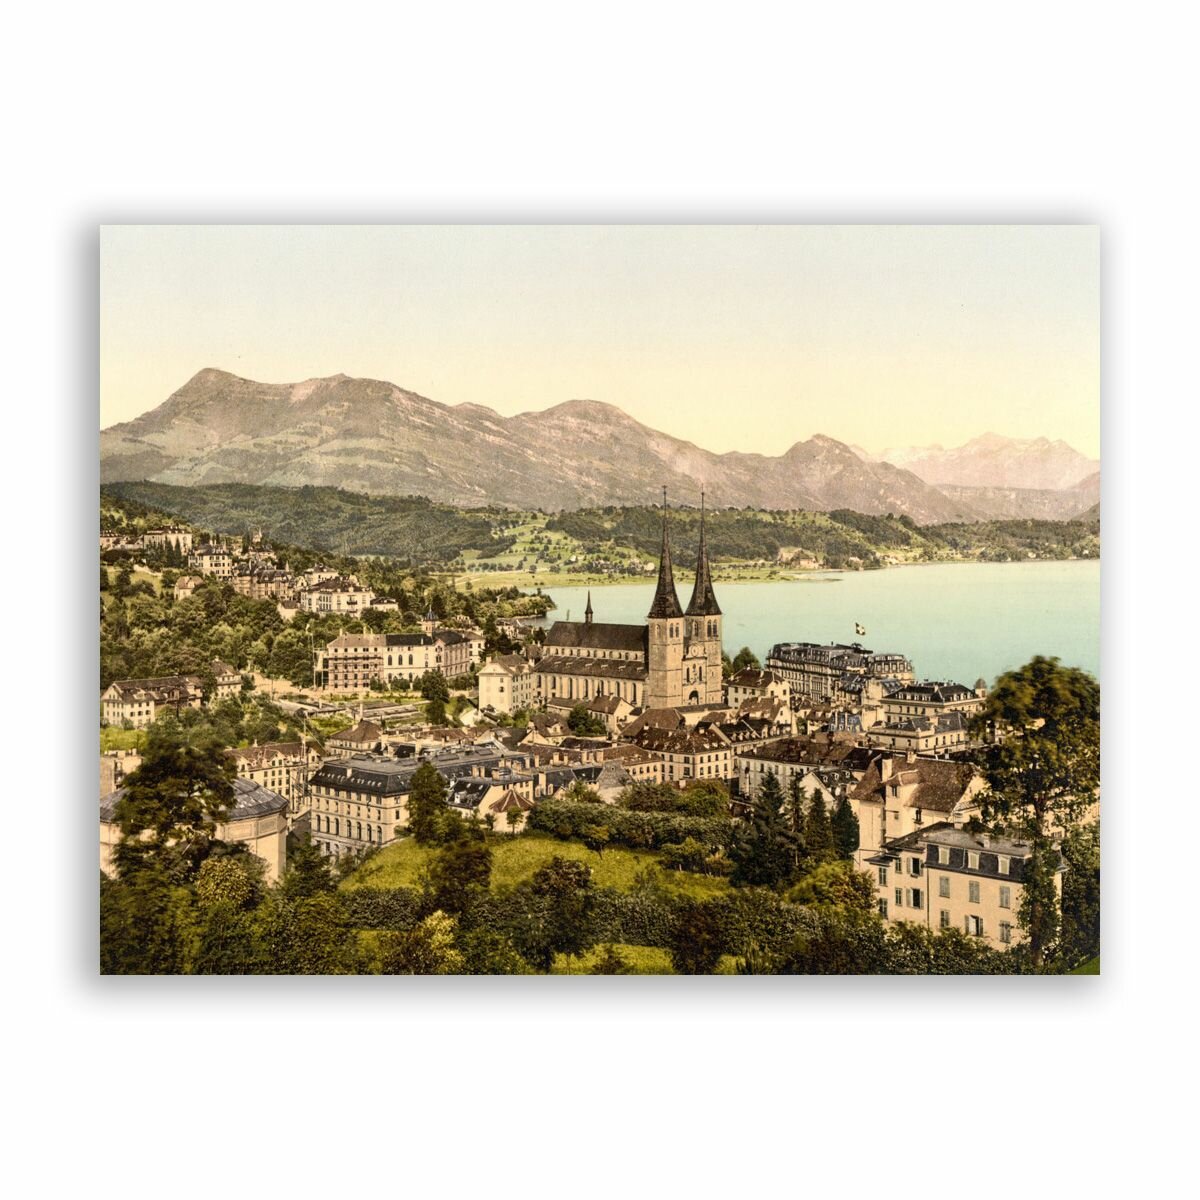 Постер плакат на бумаге / Rigi seen from the Gutsch Lucerne Switzerland / Размер 30 x 40 см